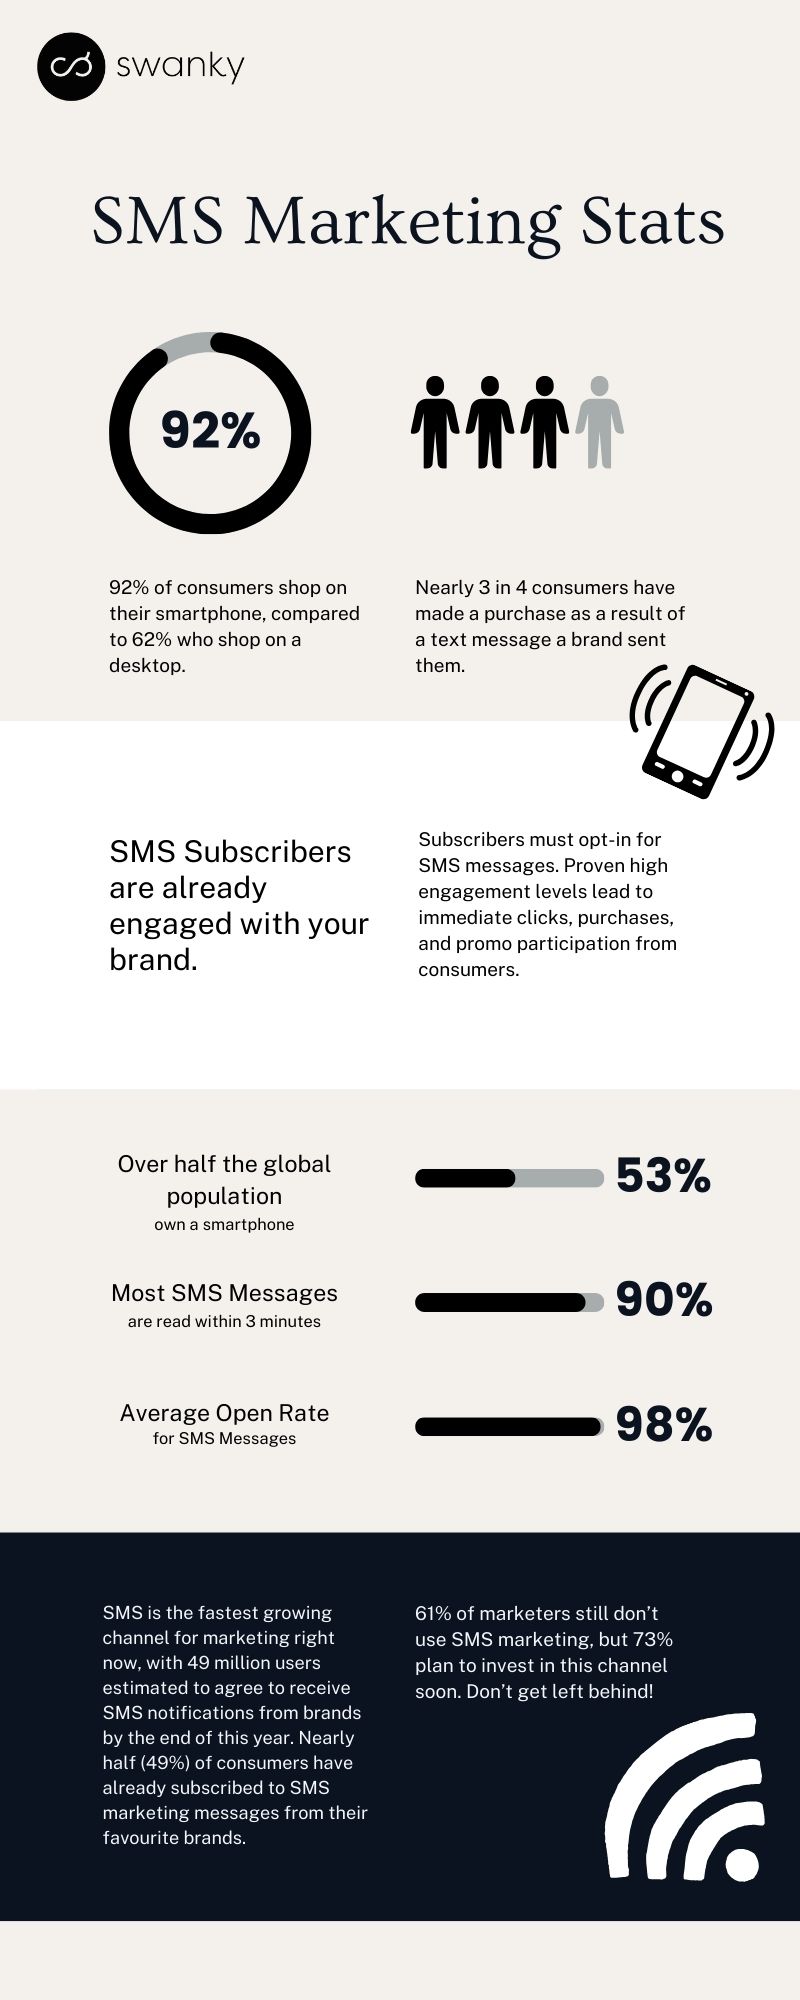 SMS marketing statistics infographic